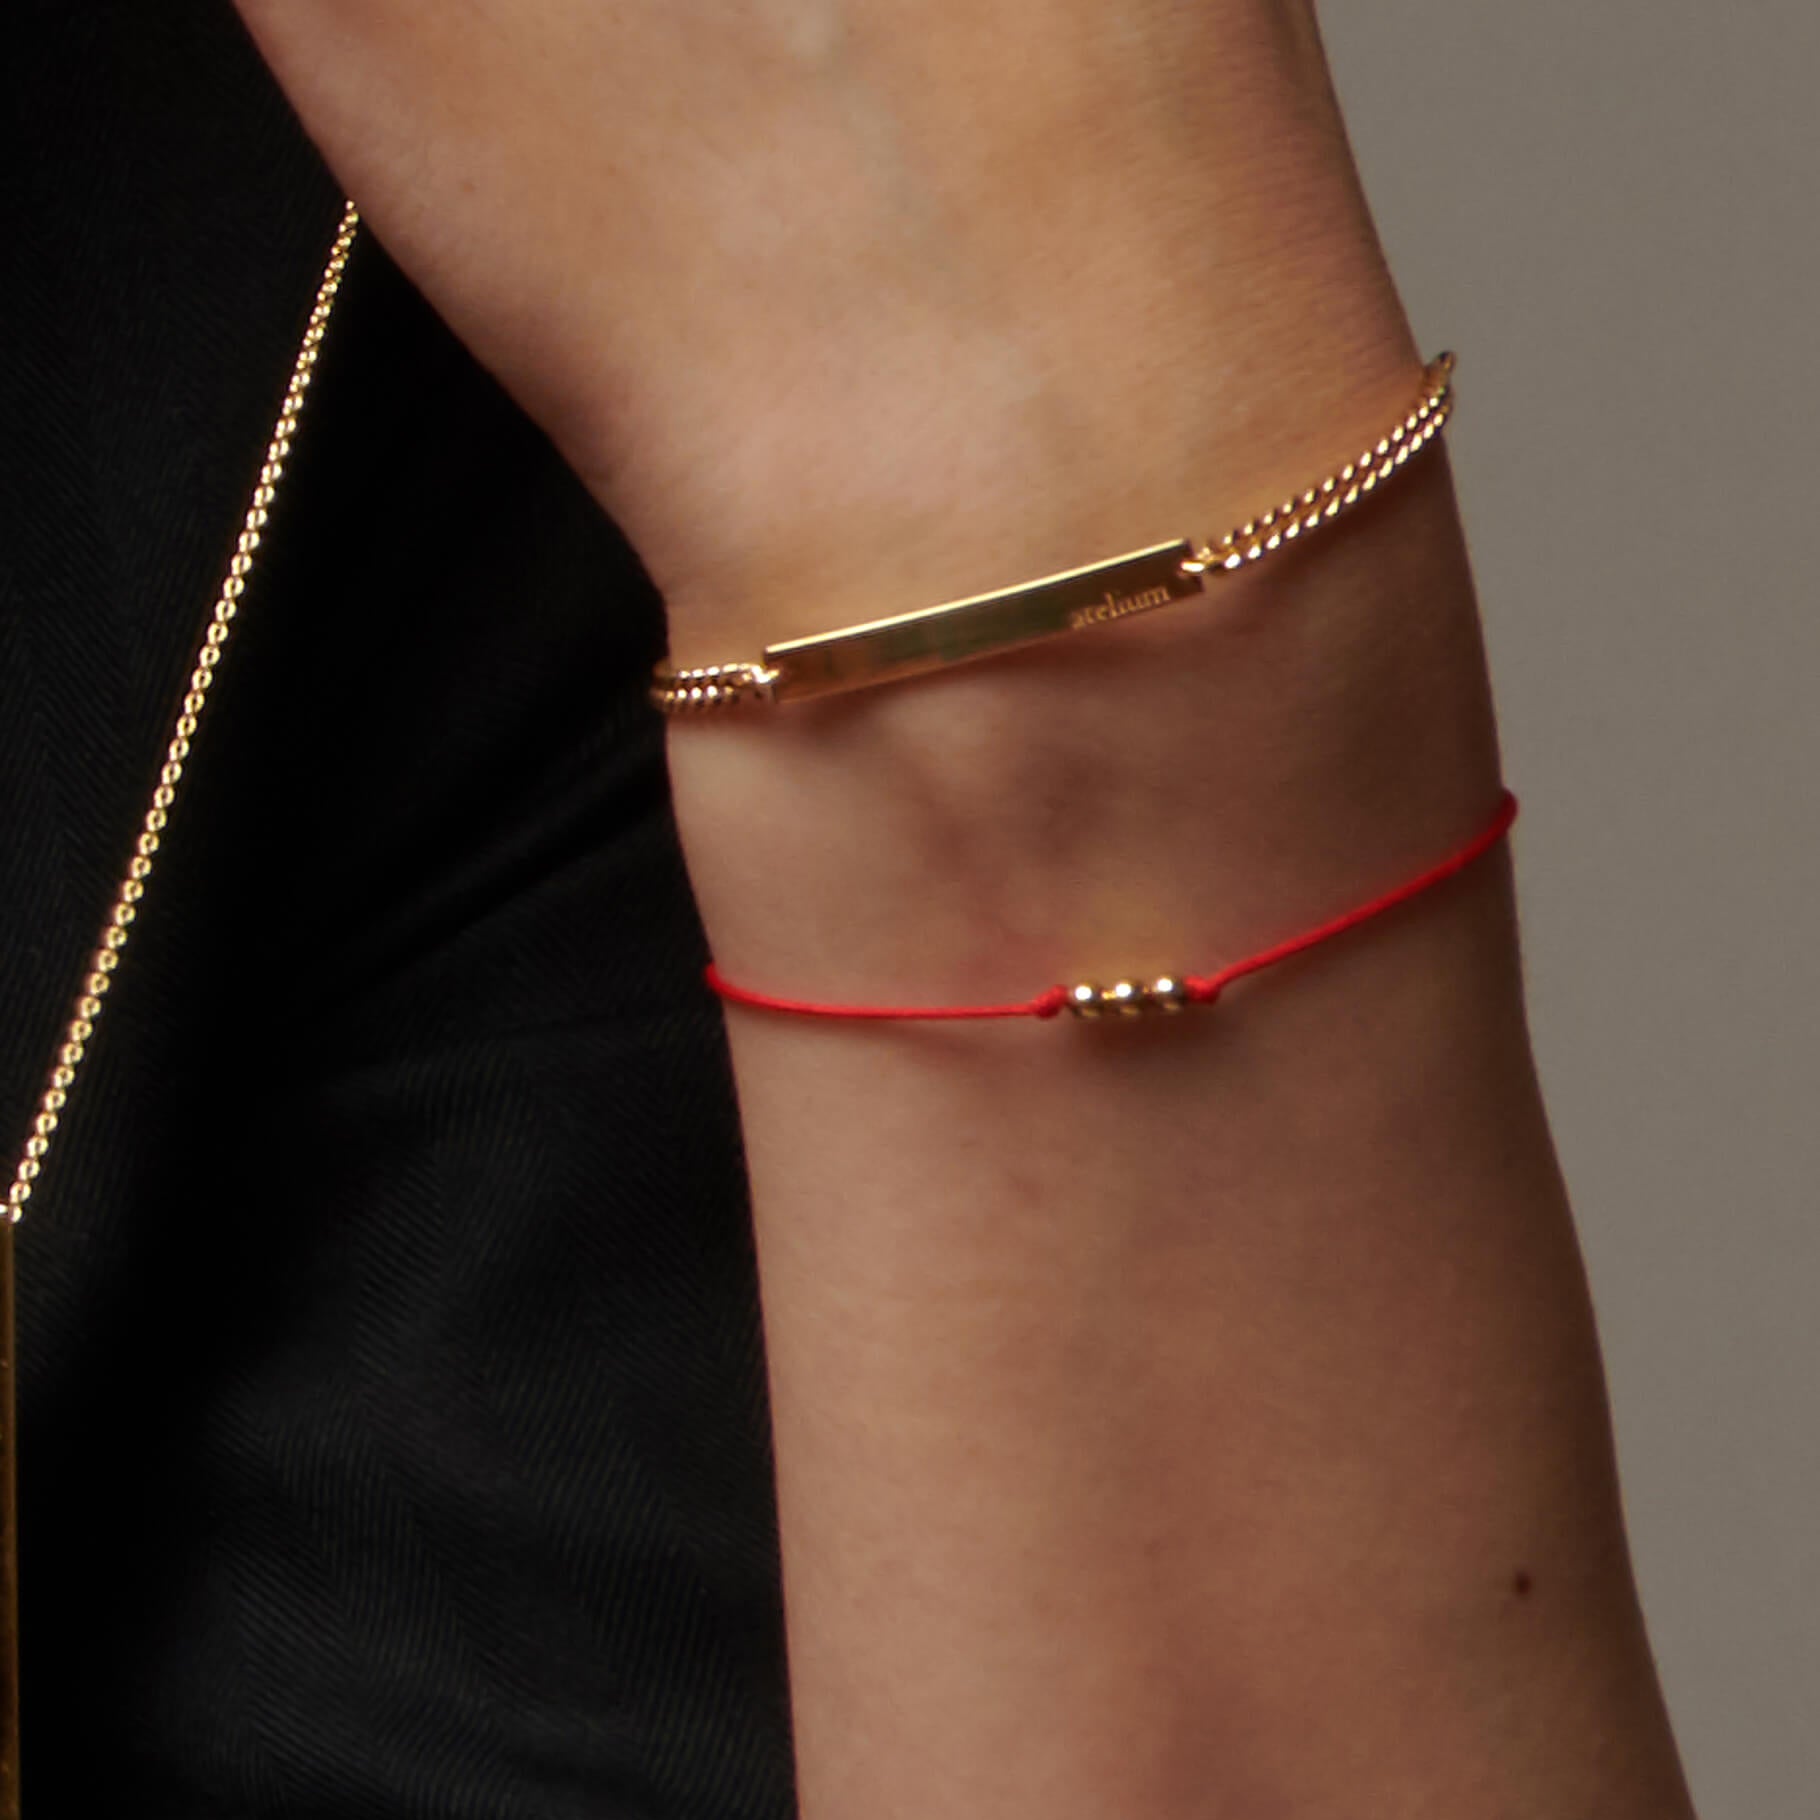 Up close wrist with string bracelets 